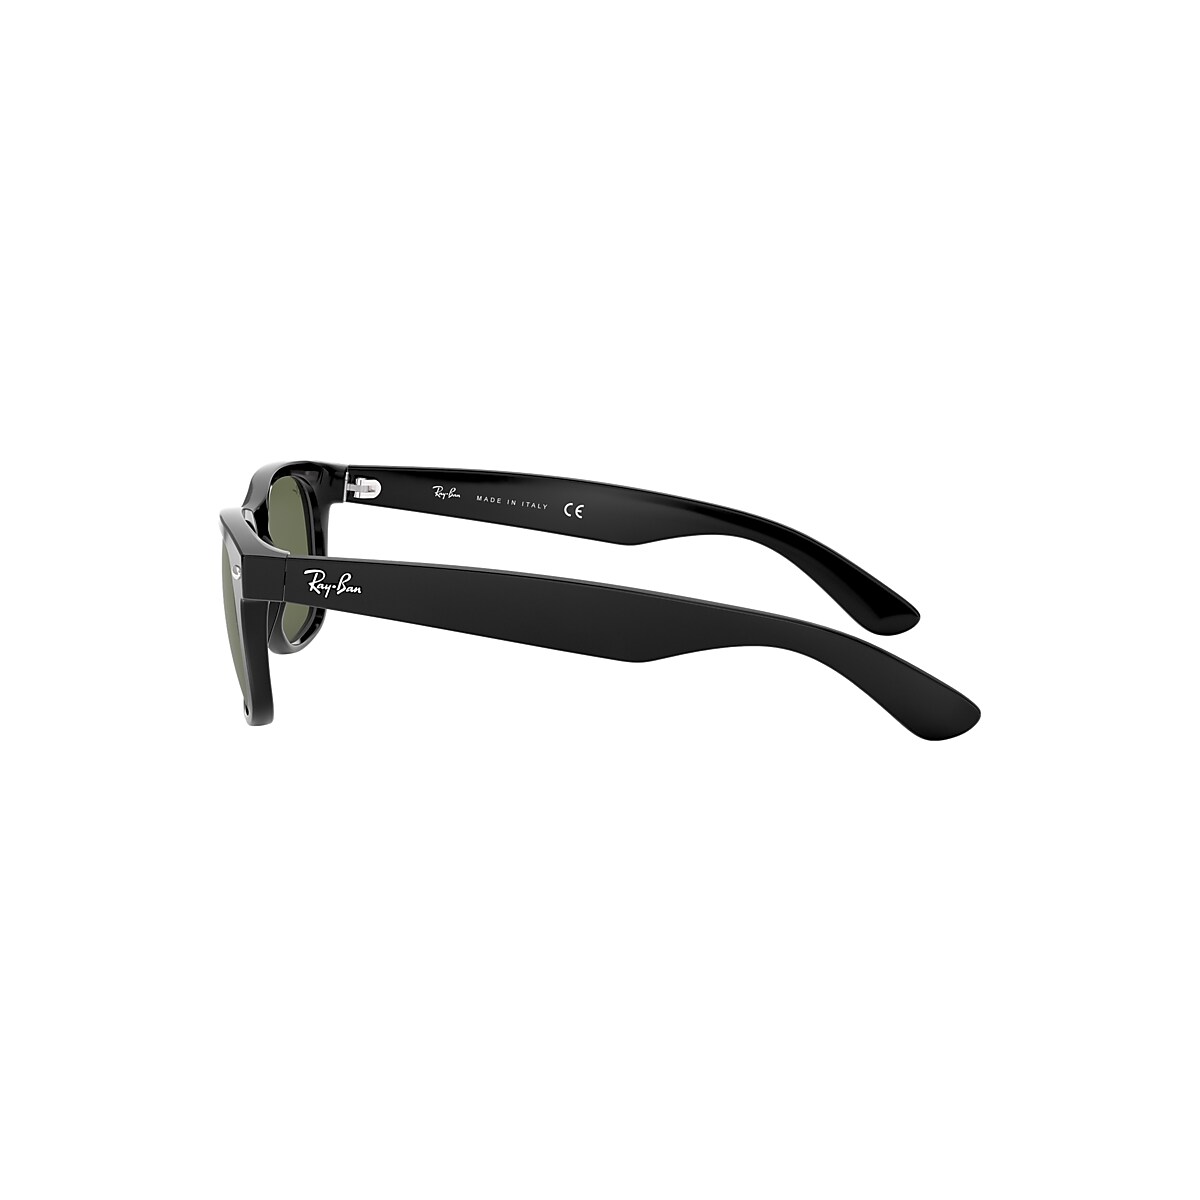 New Wayfarer Classic Sunglasses in Black and Green | Ray-Ban®